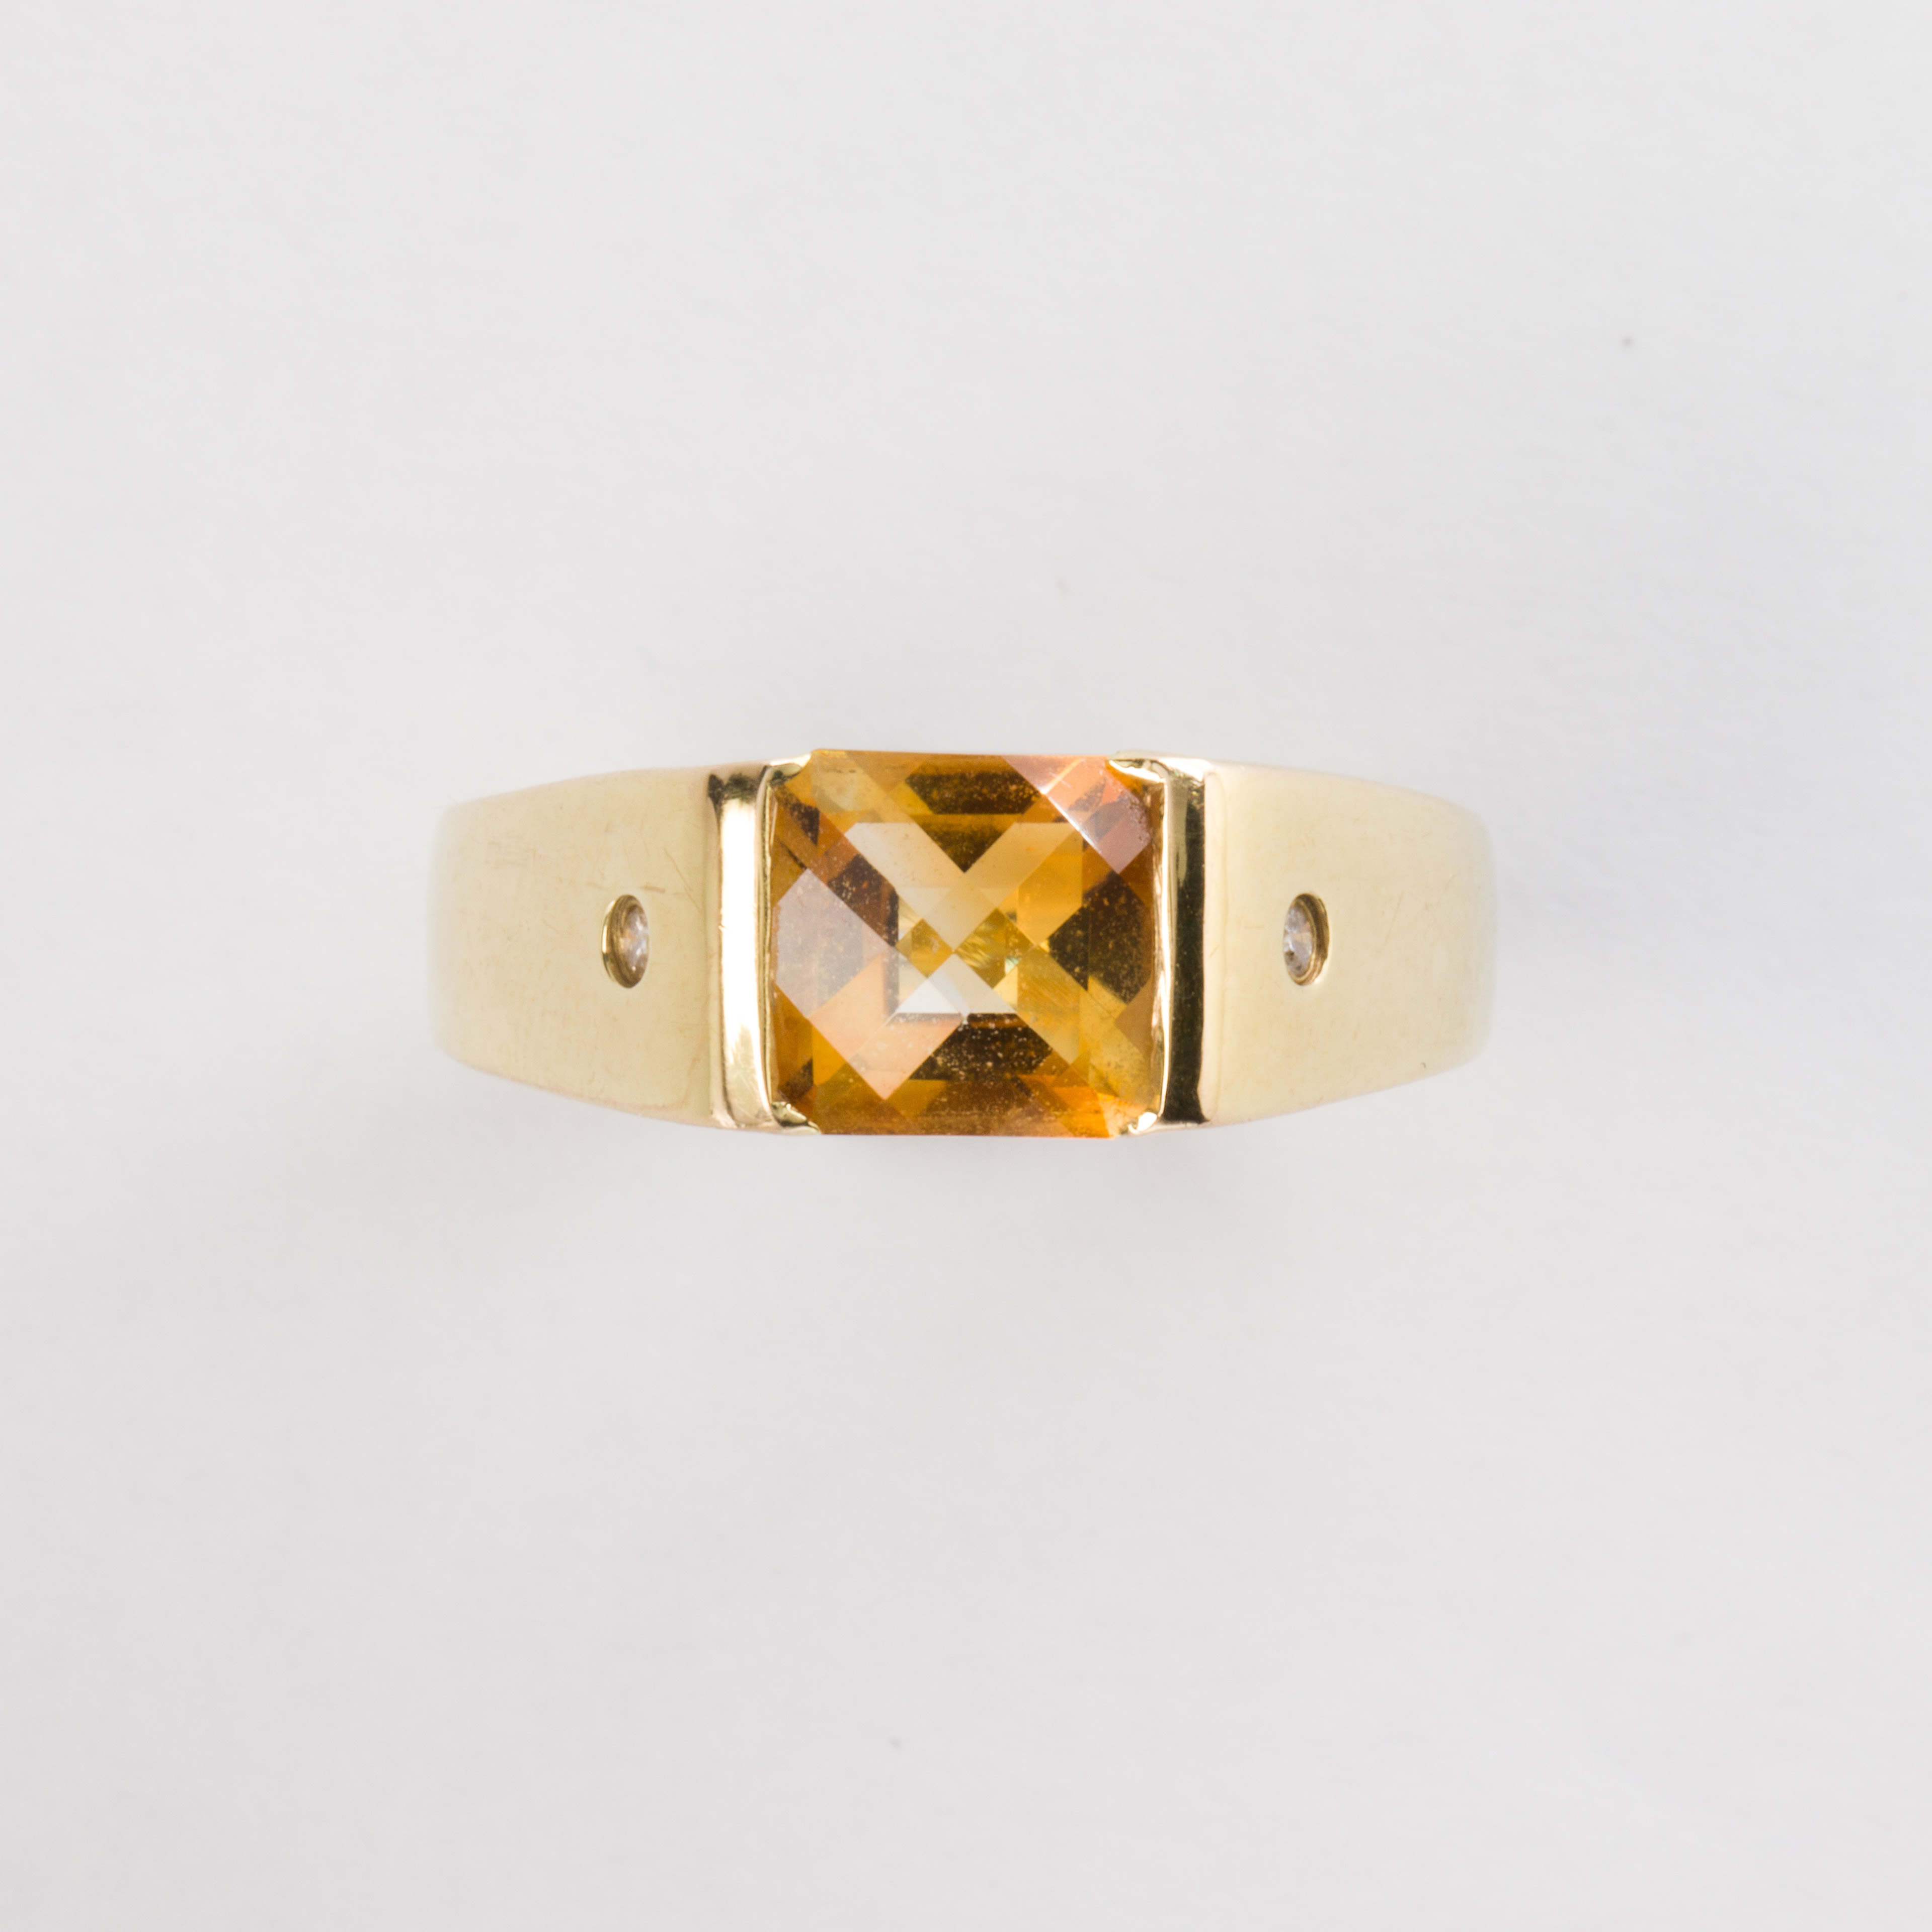 A citrine and fourteen karat gold ring